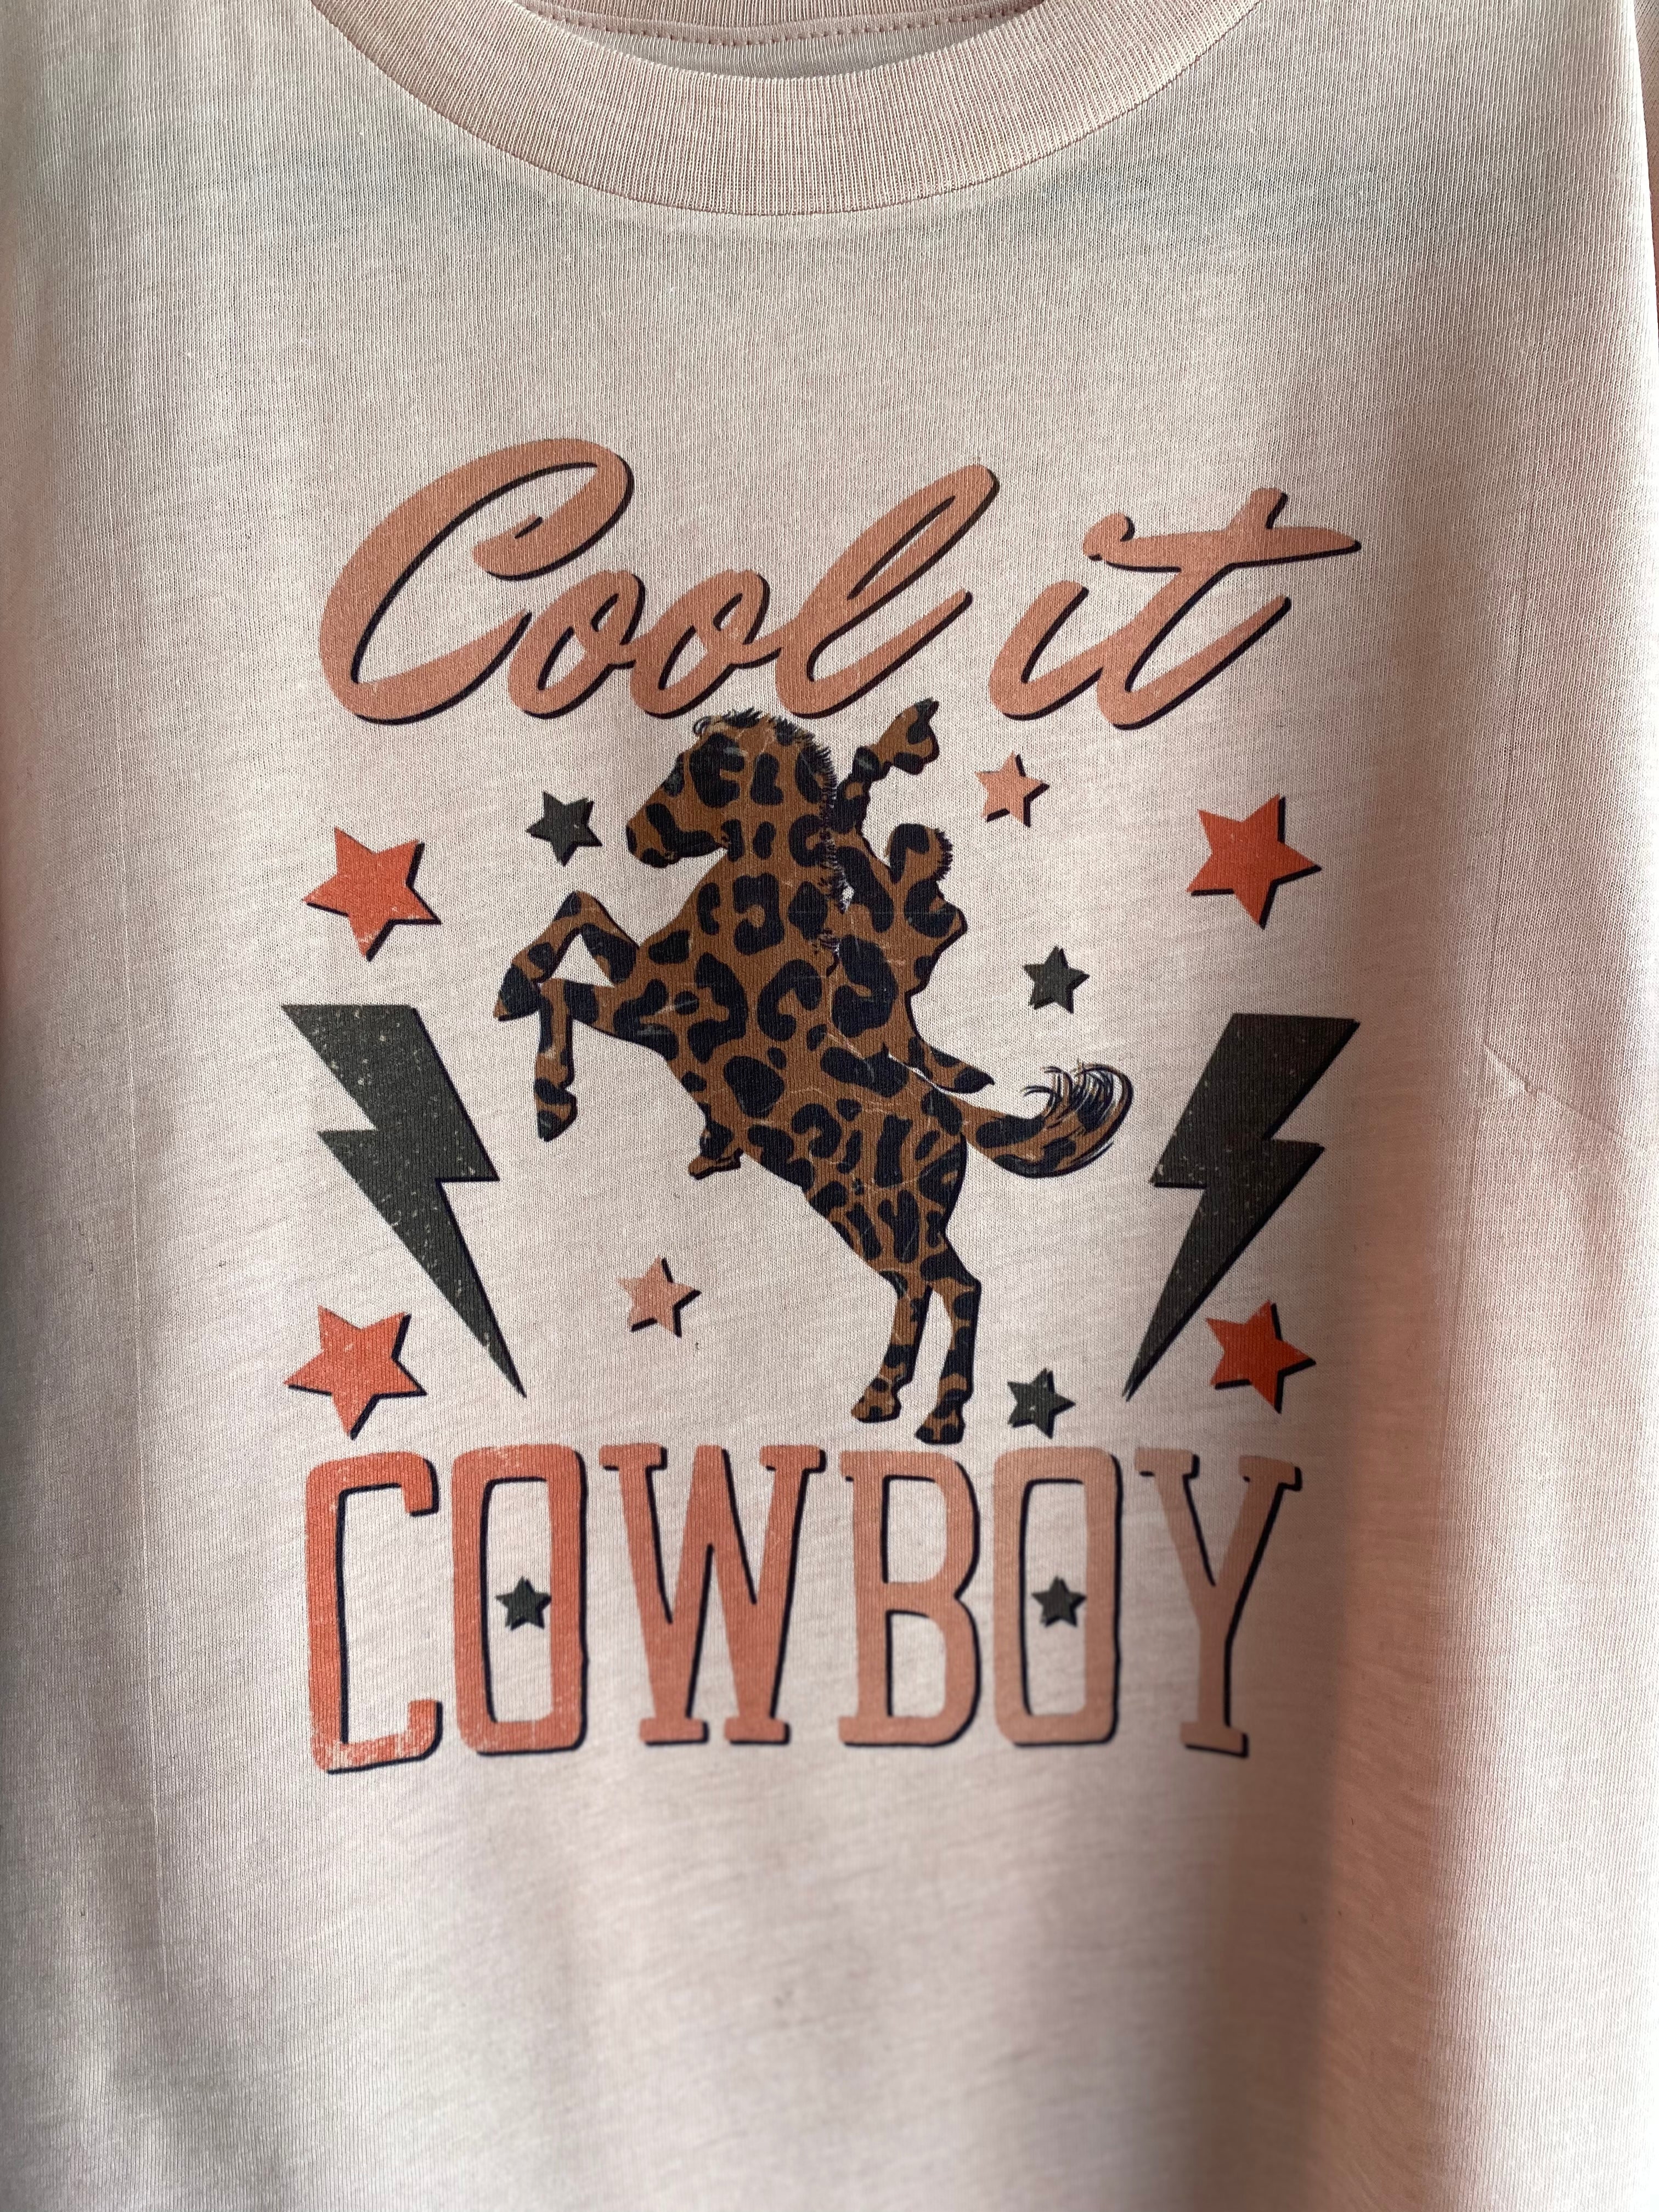 Cool it Cowboy Tee